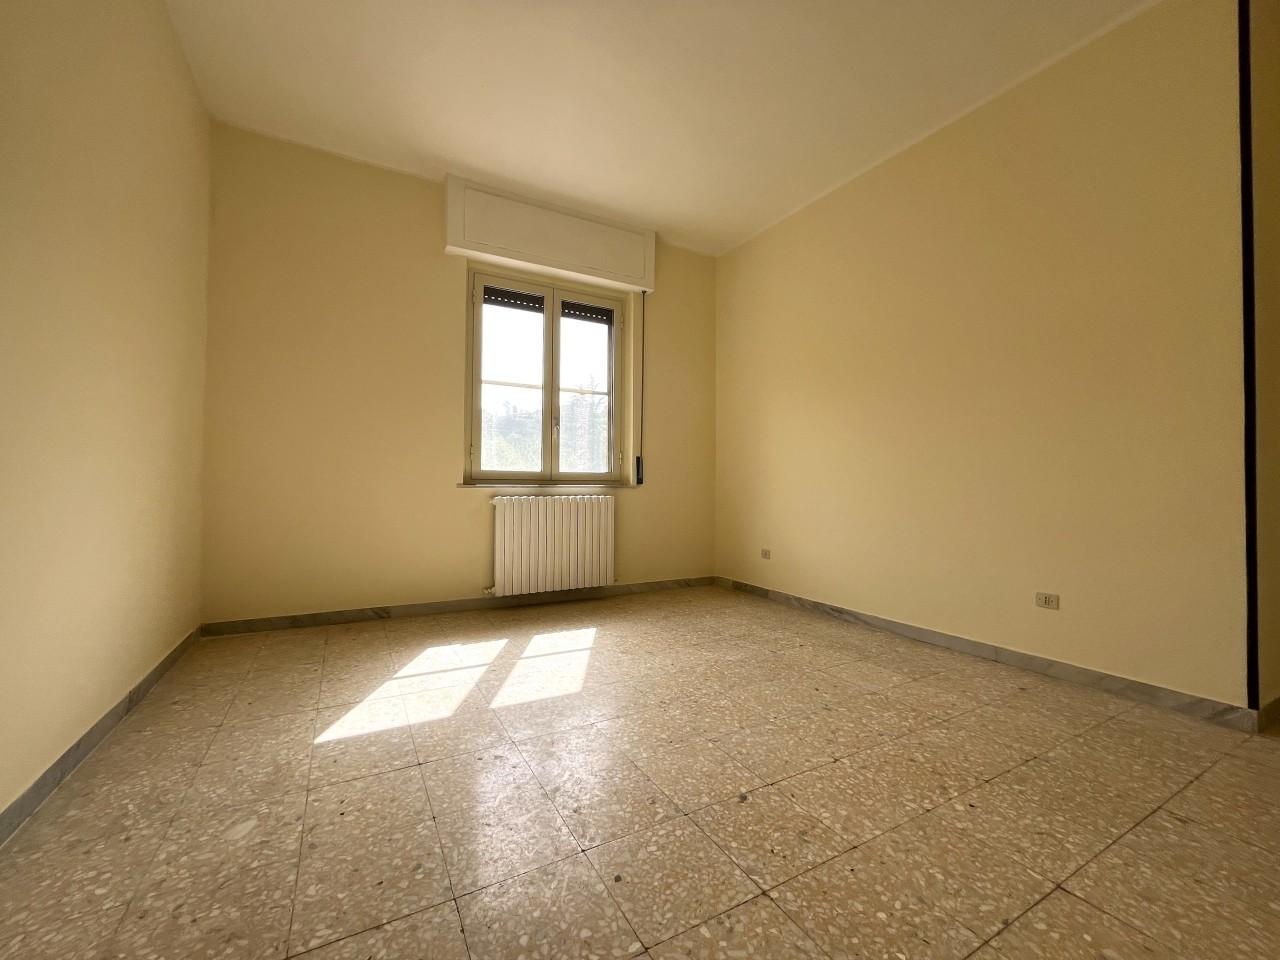 Rent Two rooms, Catanzaro foto